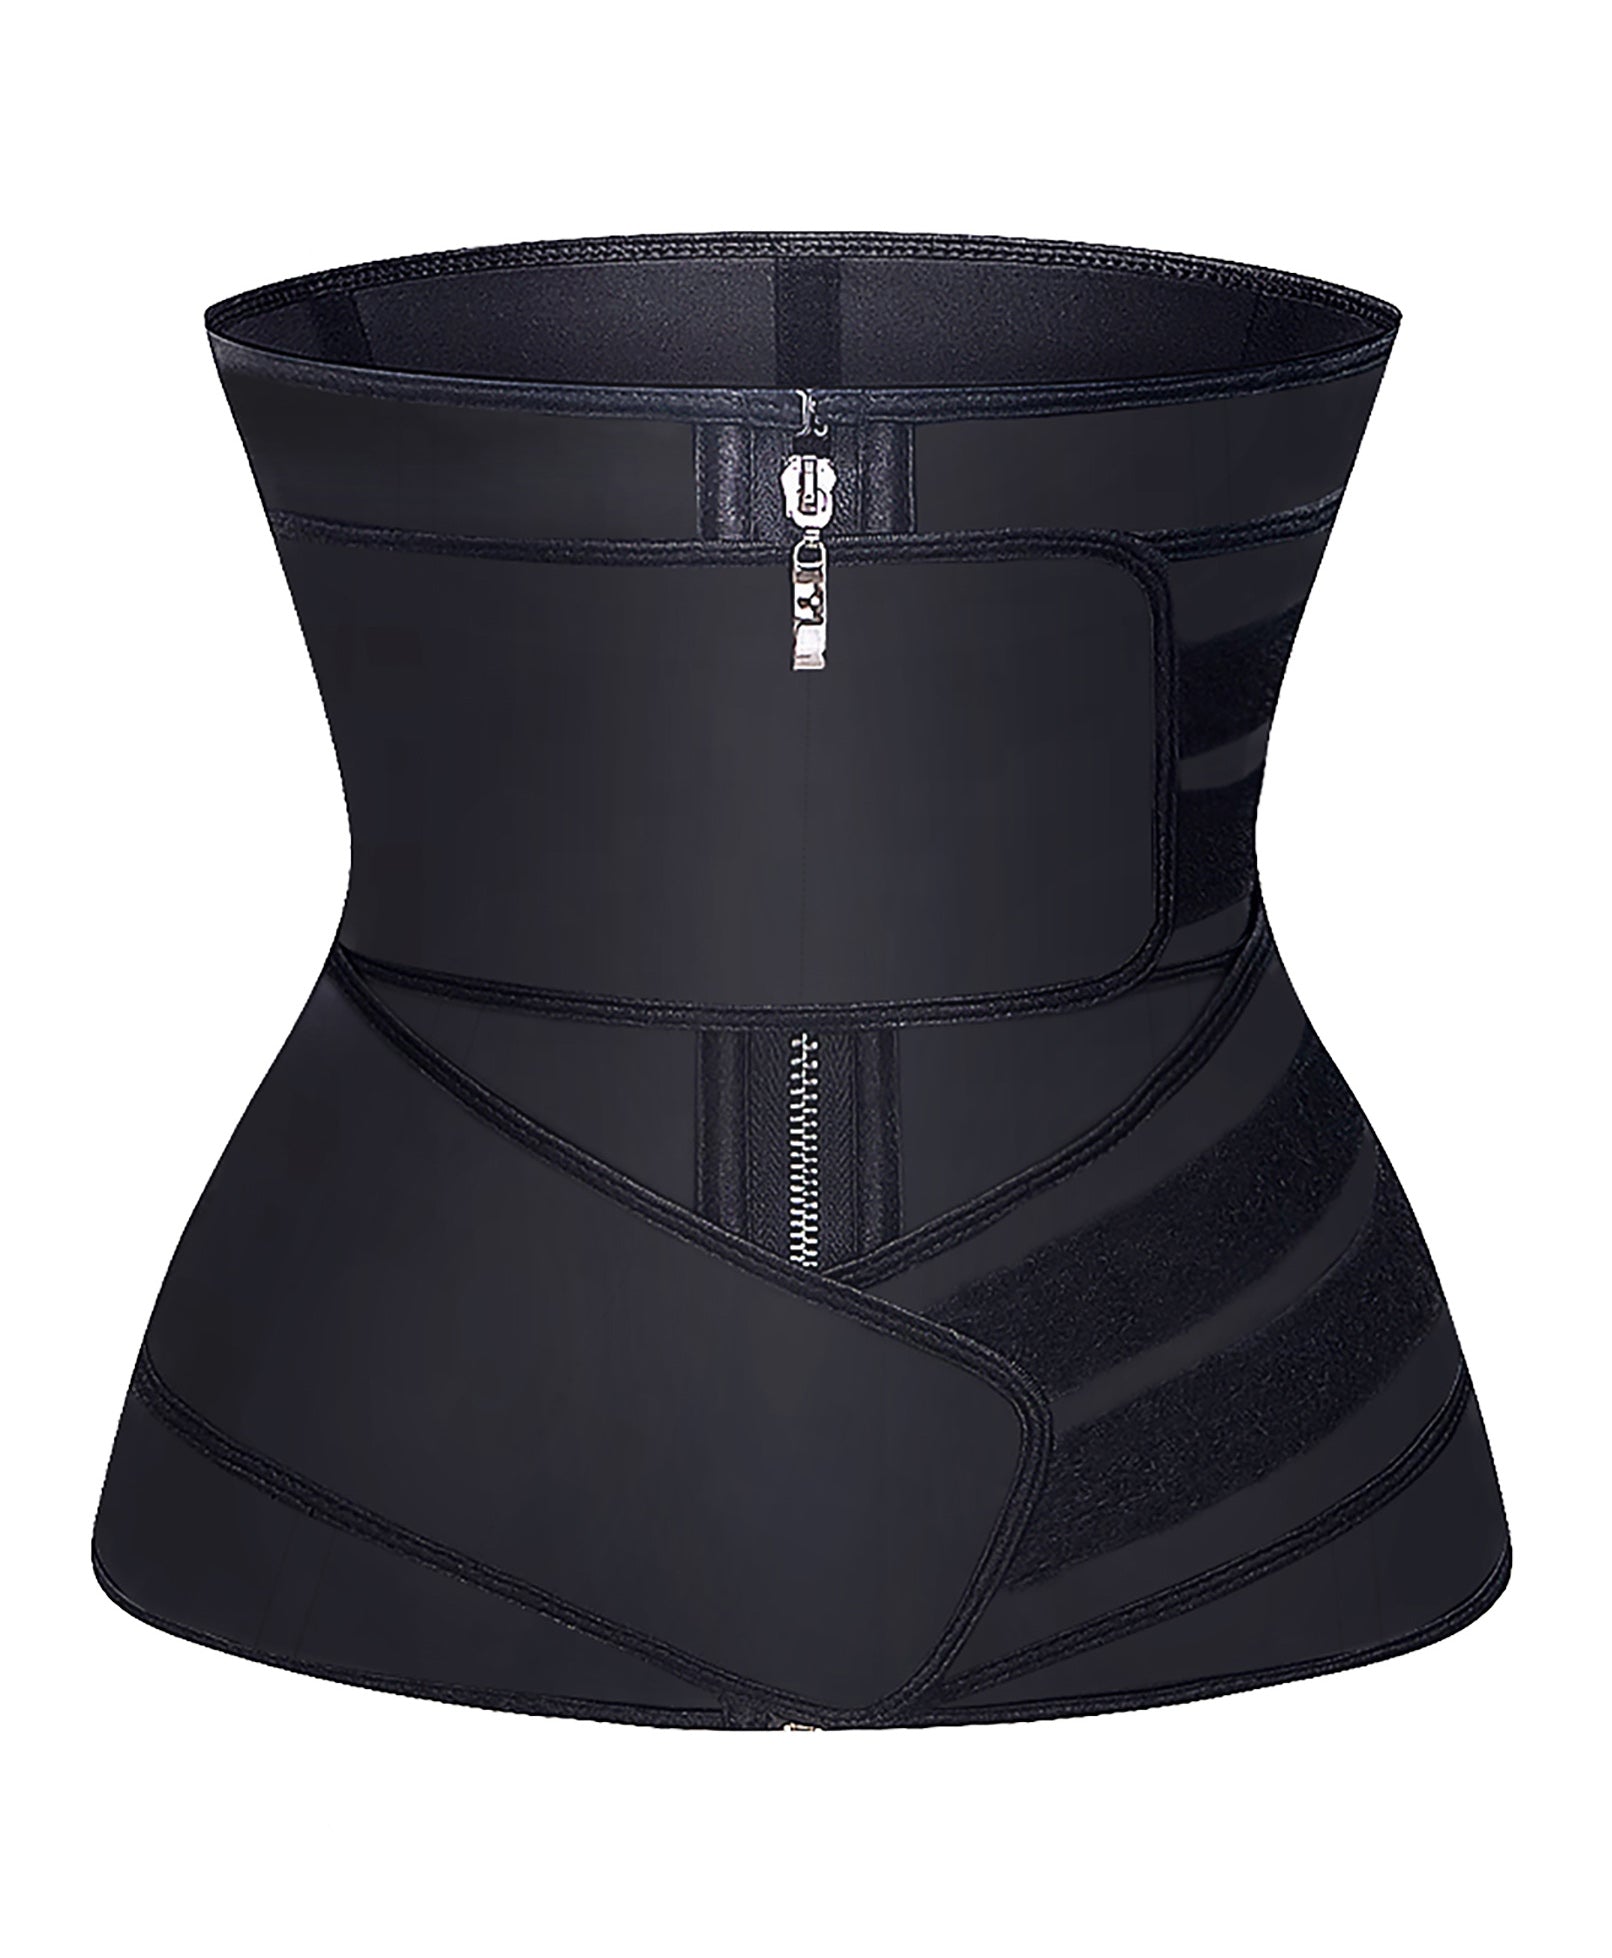 YIANNA Waist Trainer for Women Tummy Control Latex Underbust Waist Cincher  Corset Sport Girdle Hourglass Body Shaper,(Black, XS) : : Clothing,  Shoes & Accessories